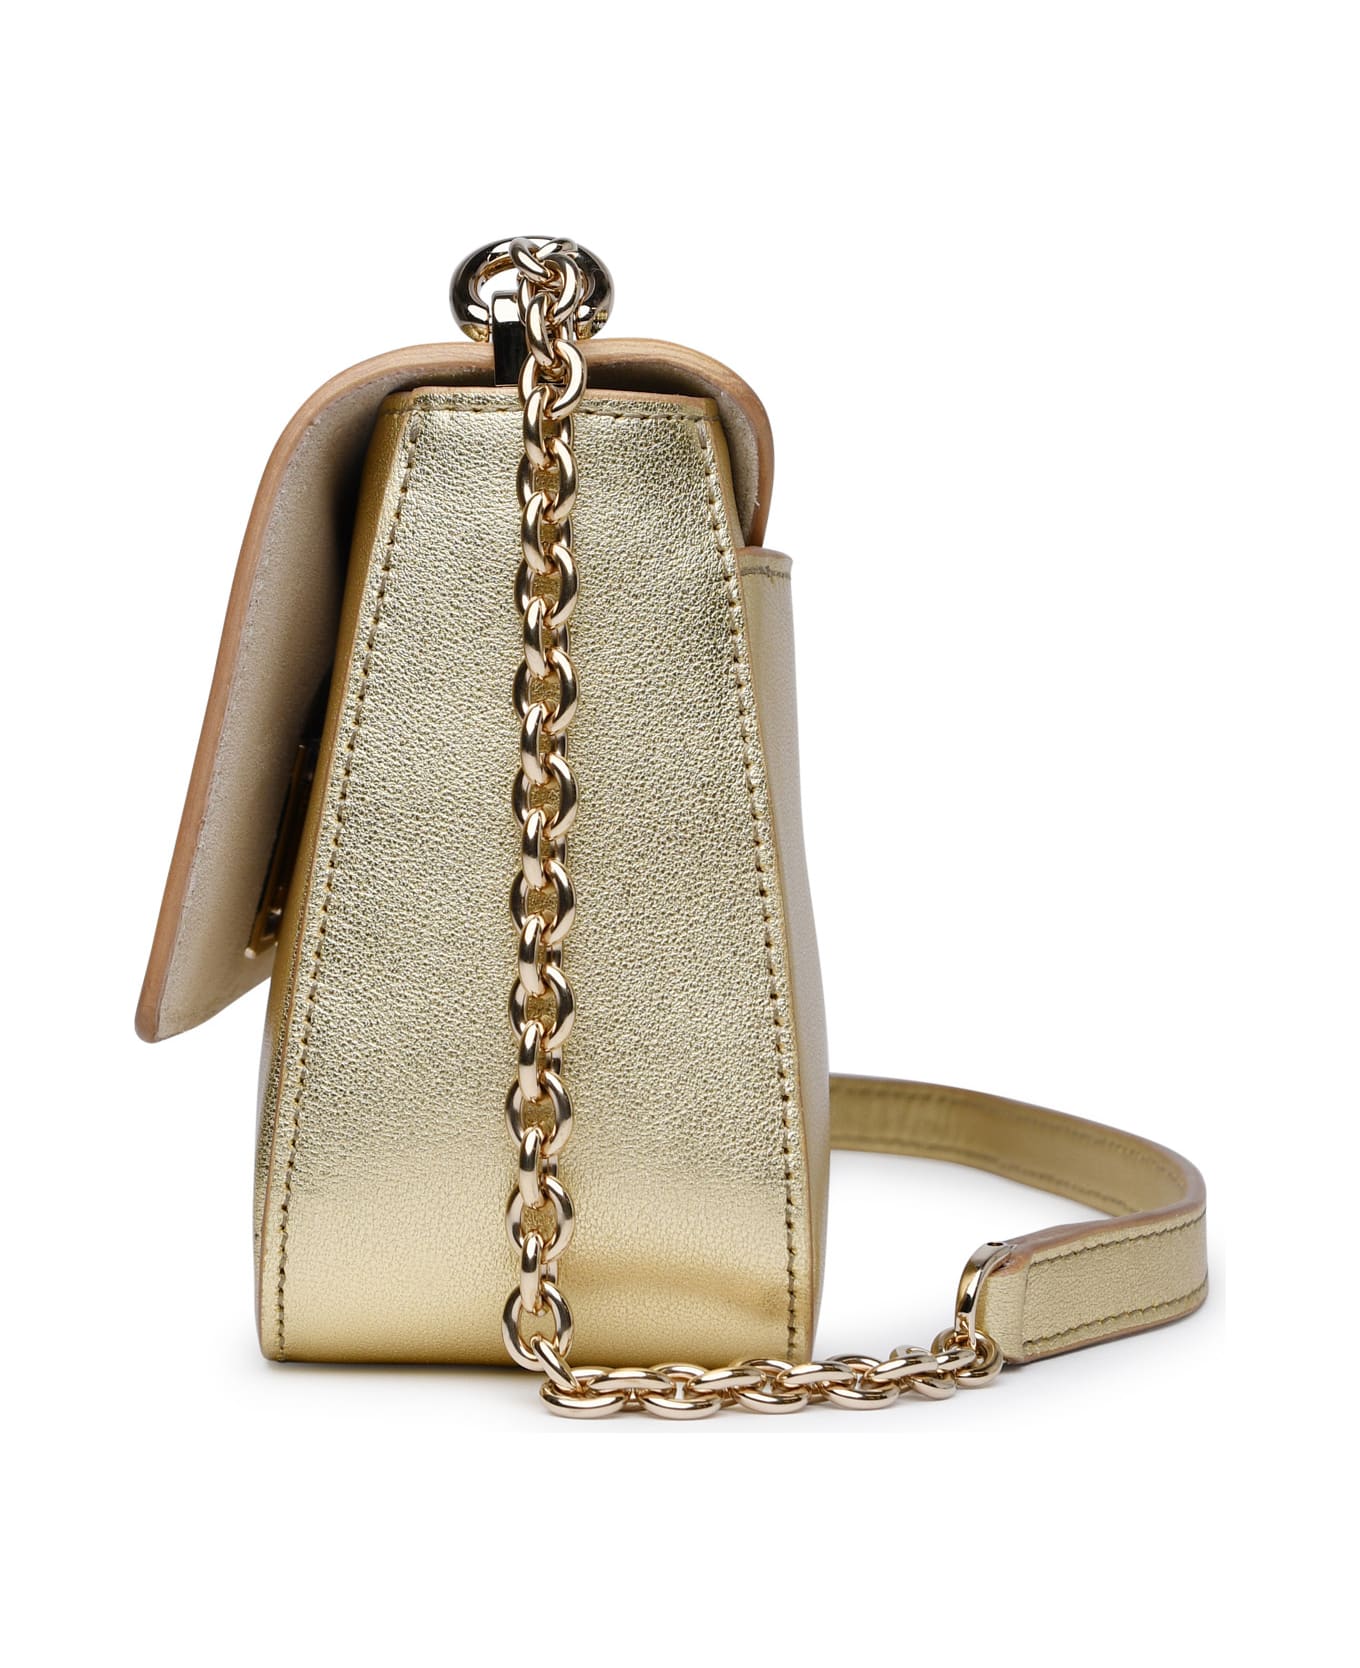 Furla 'furla 1927' Gold Calf Leather Bag - Oro